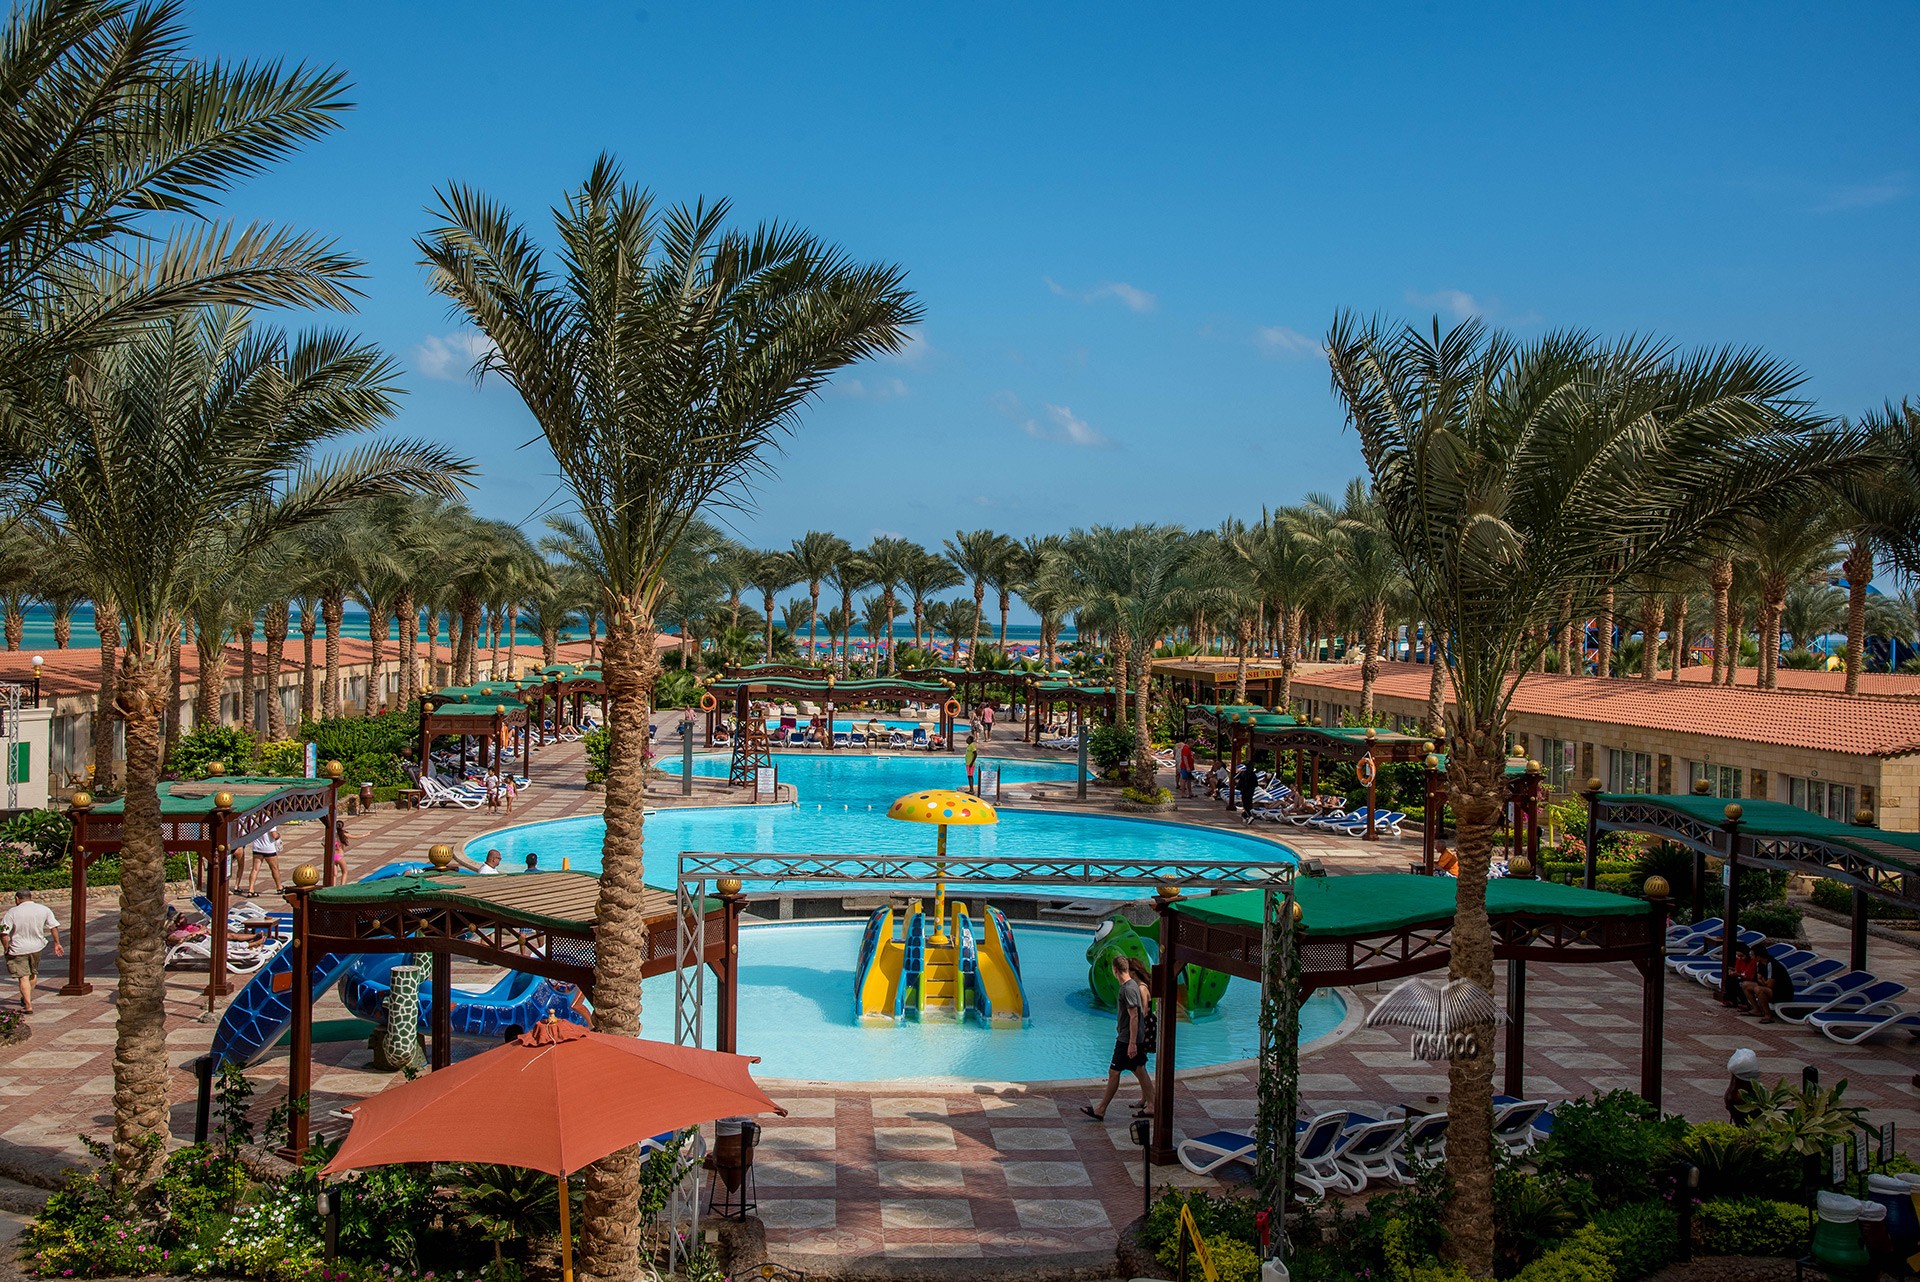 The Resort in Hurghada